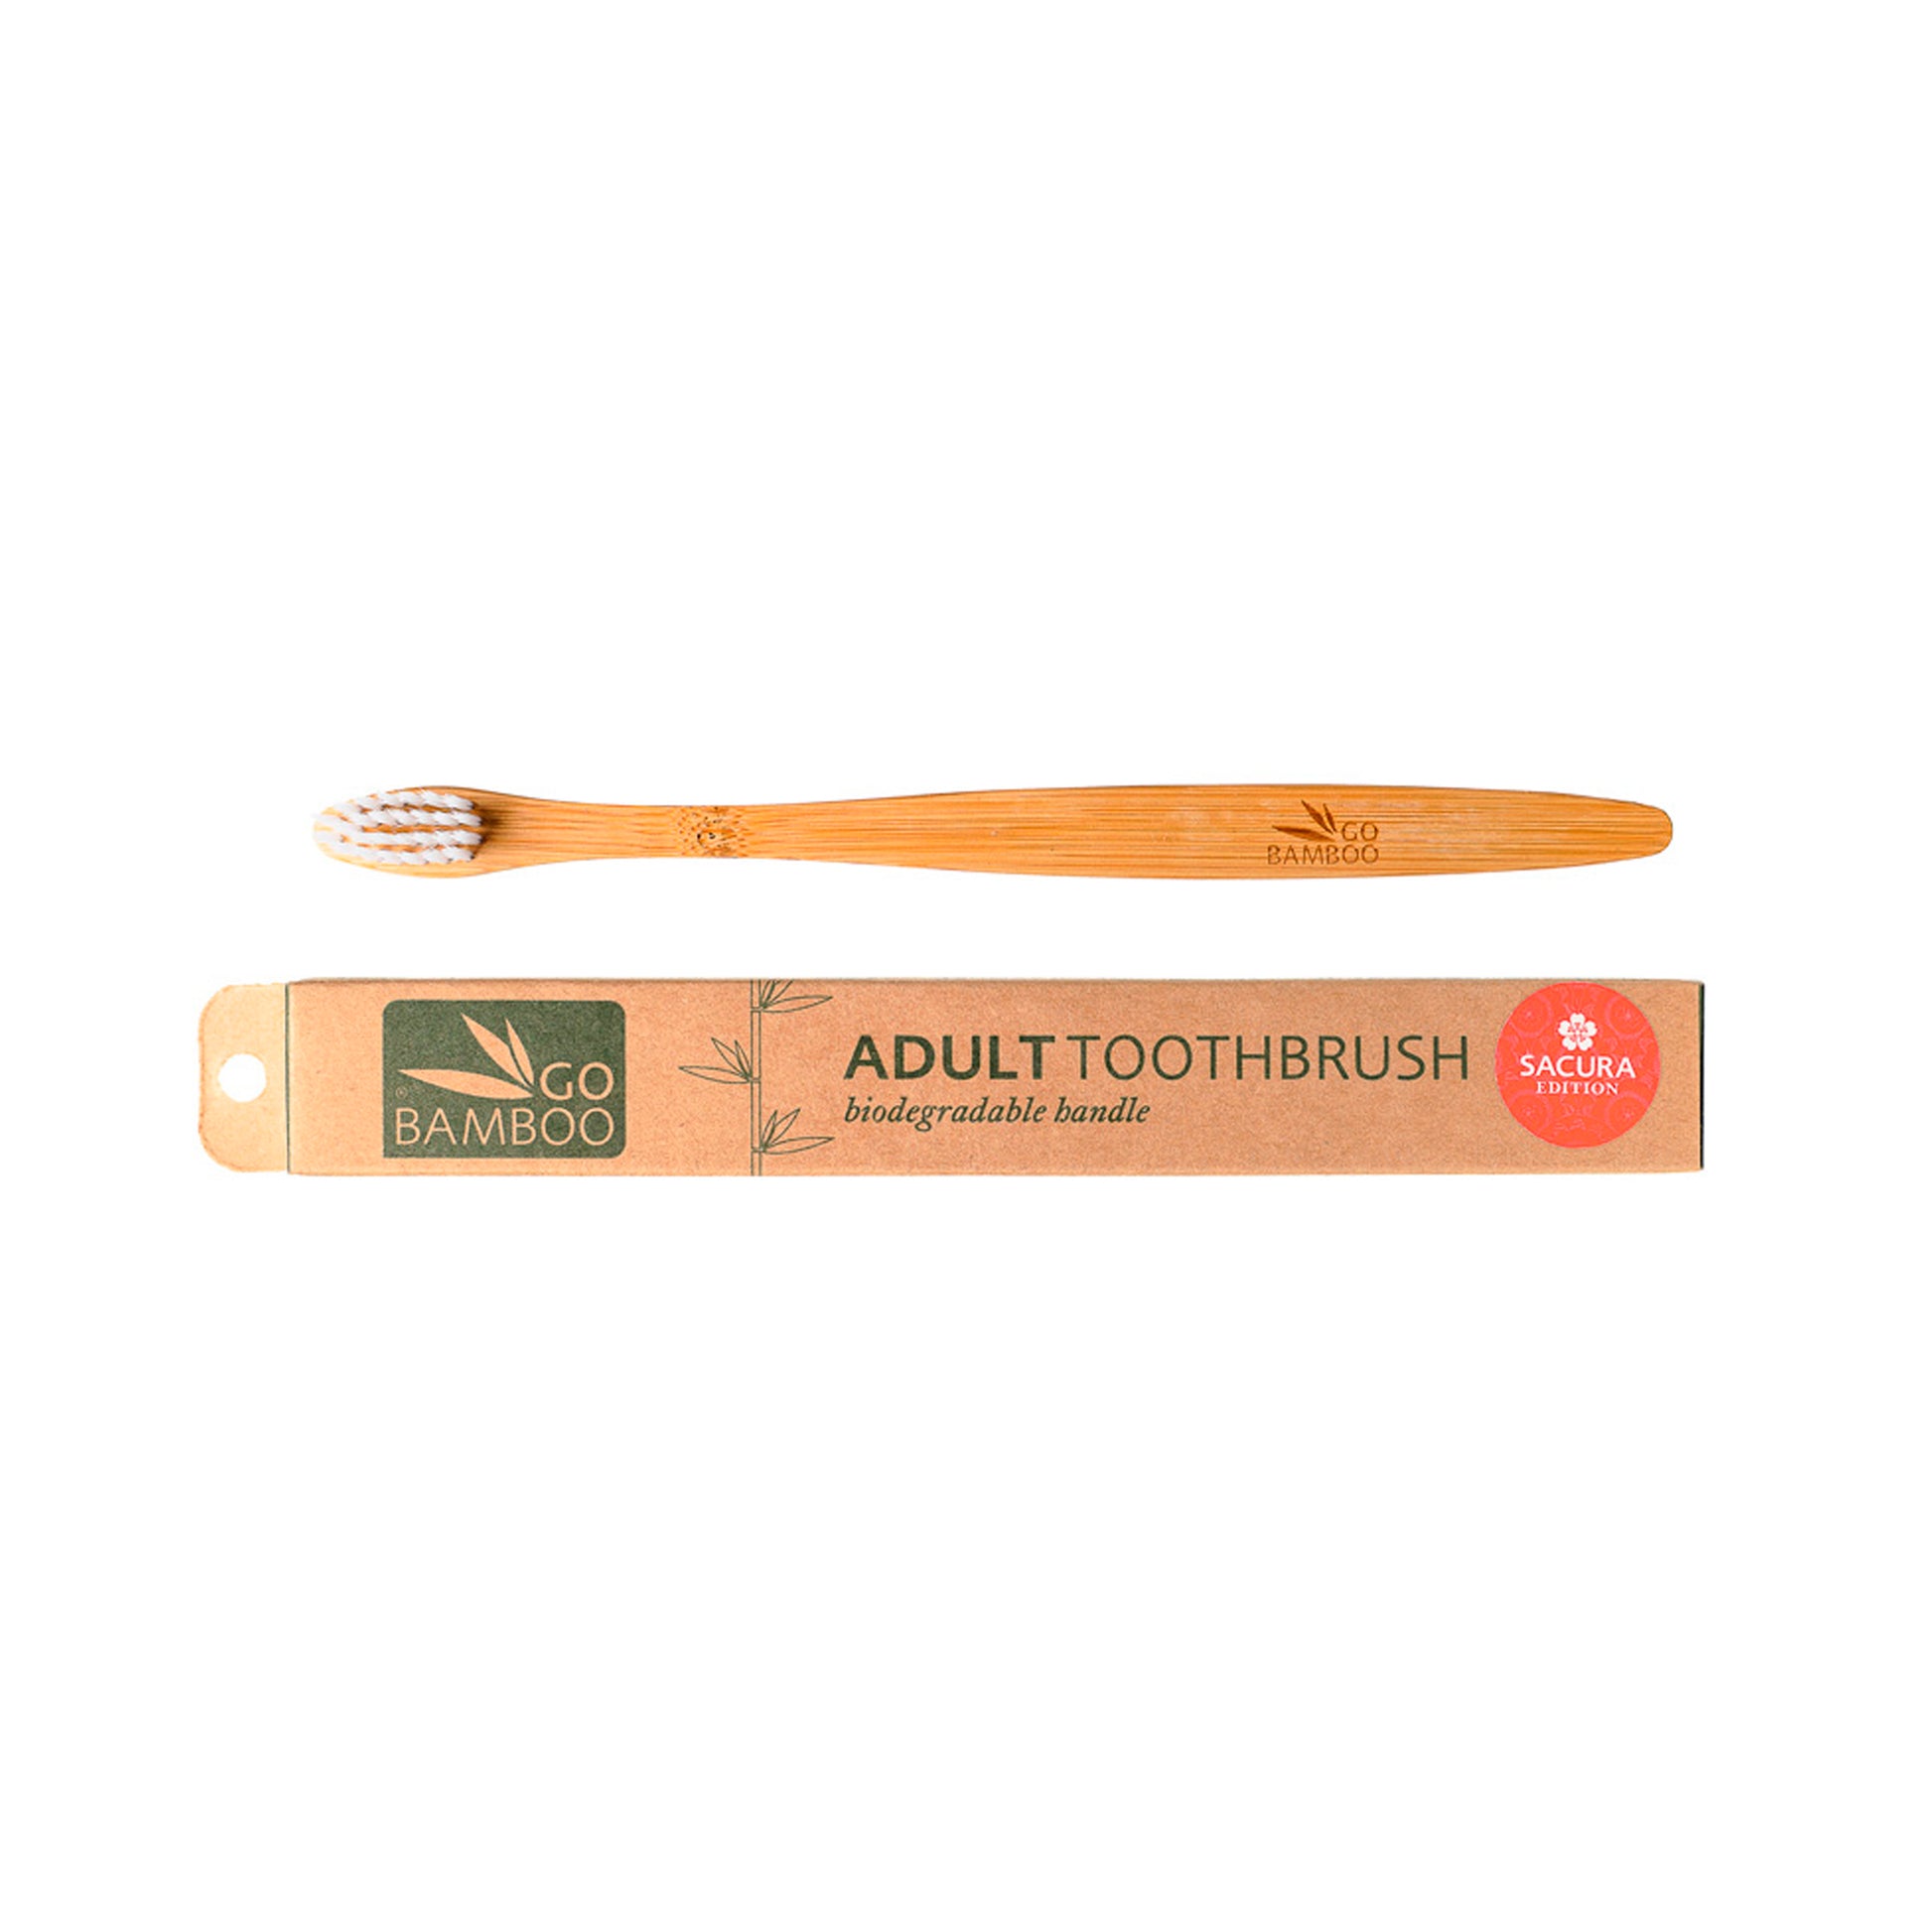 Best Wooden Toothbrush - Sacura Japanese Toothbrush - Go Bamboo